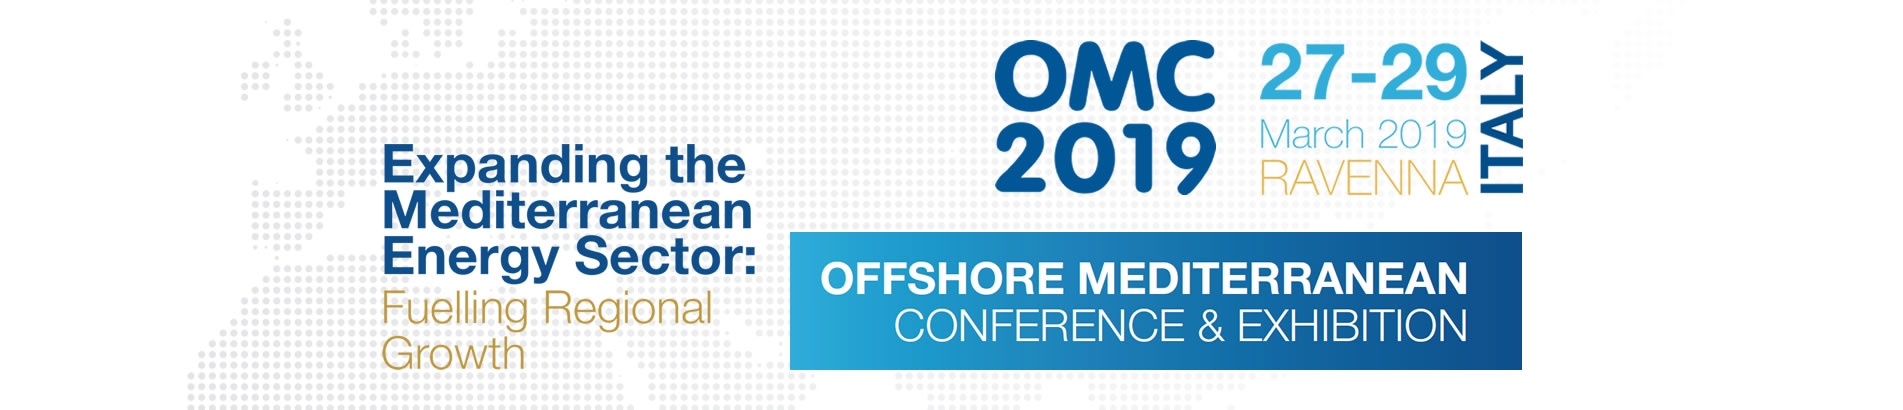 OMC 2019 - OFFSHORE MEDITERRANEAN CONFERENCE & EXHIBITION